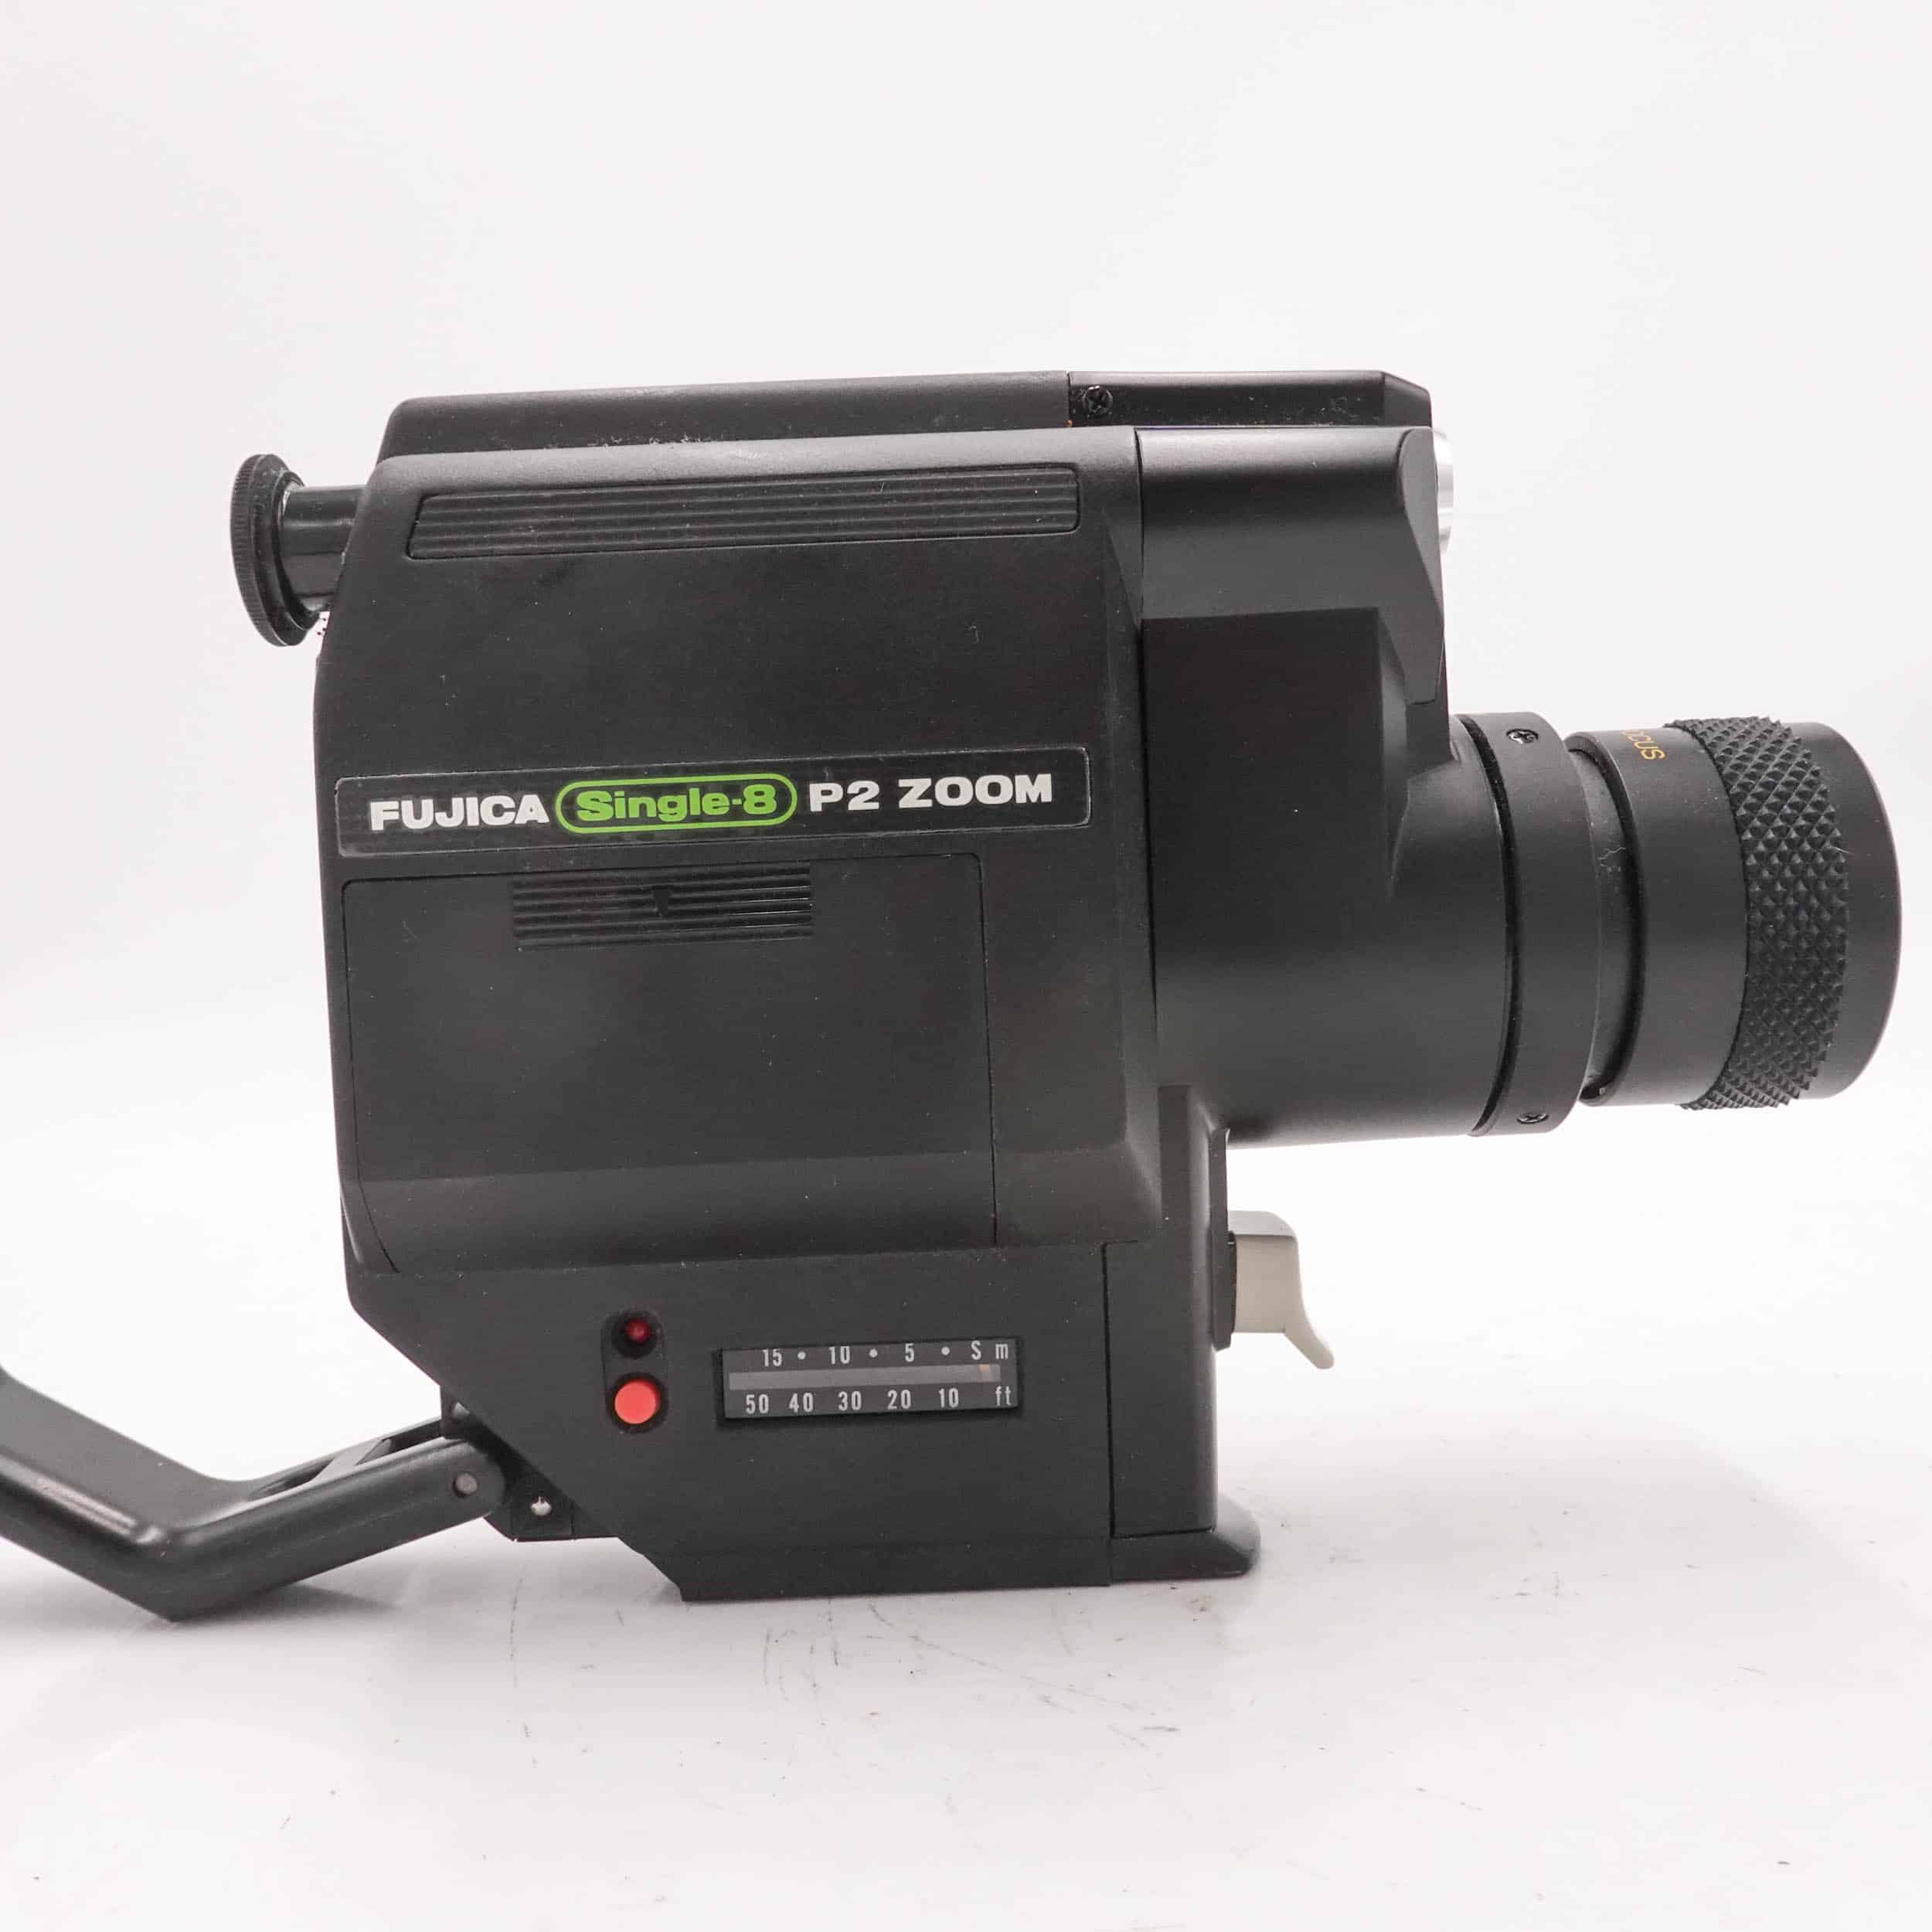 Fujica P2 Zoom Single-8 Camera - CameraCrate.com - Super 8 & 8mm